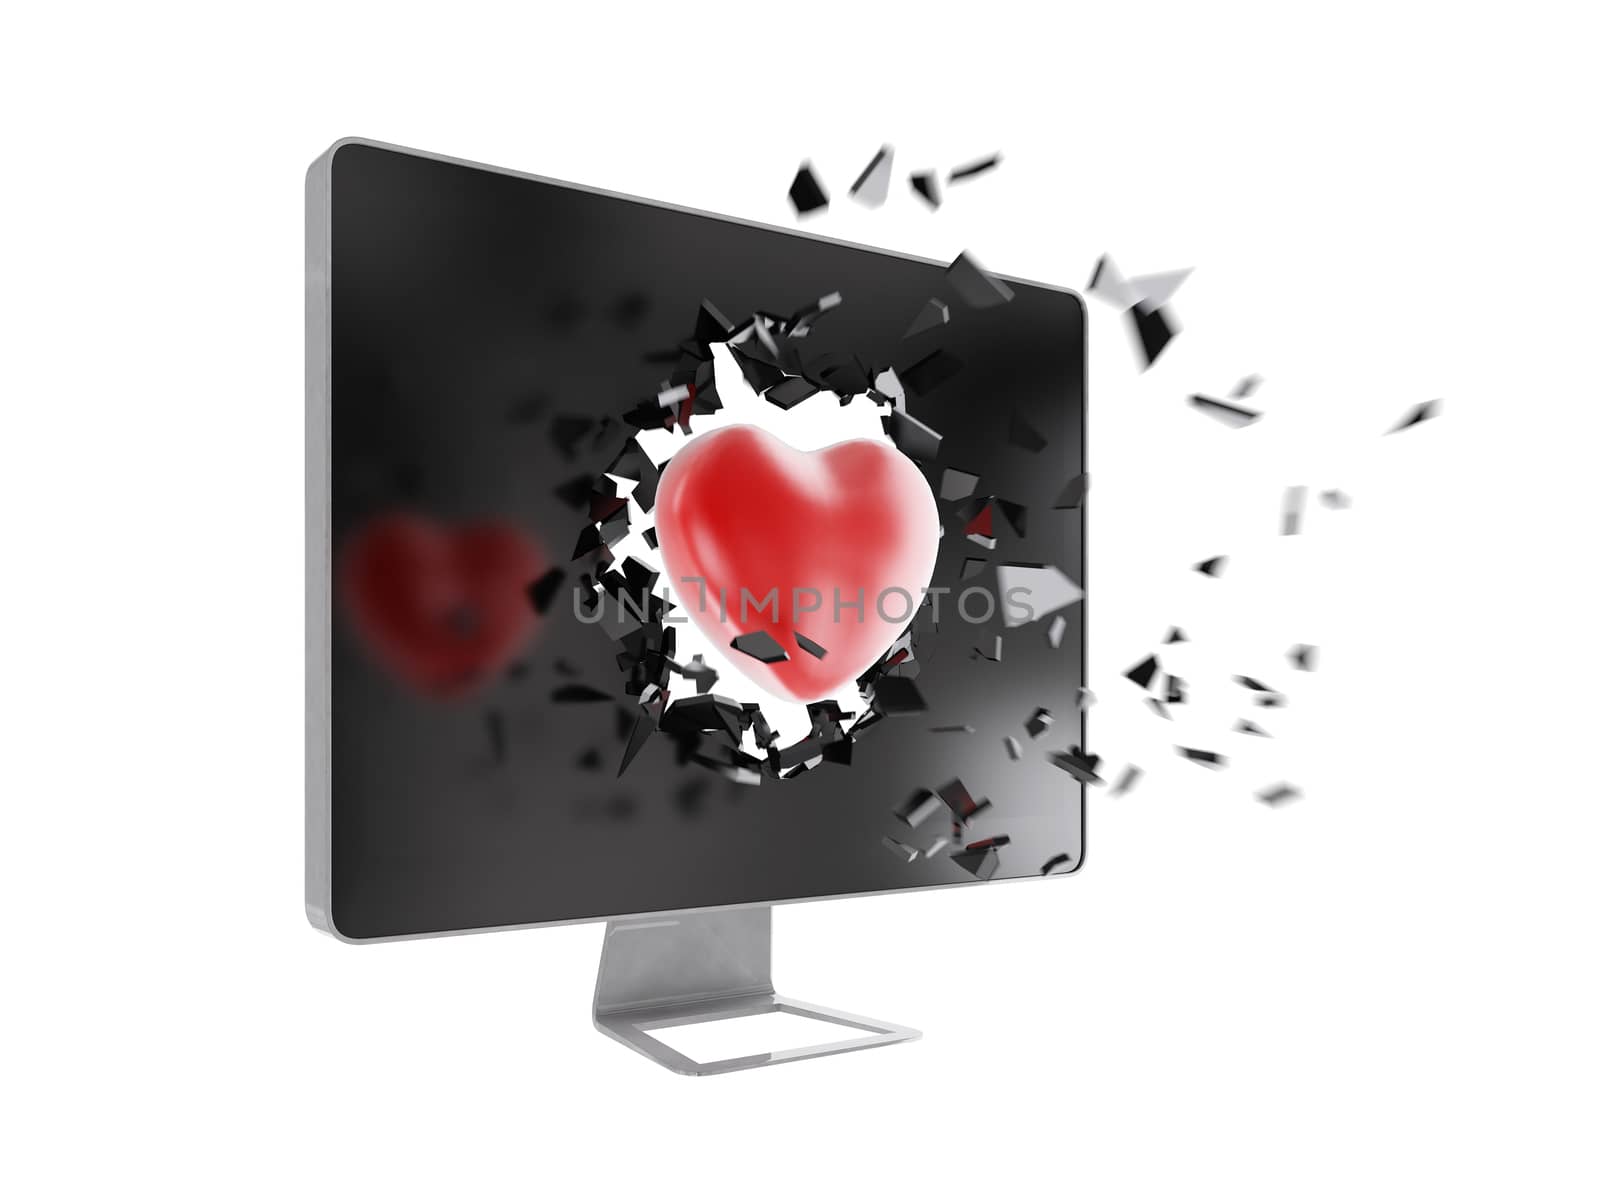 red heart destroy computer screen.